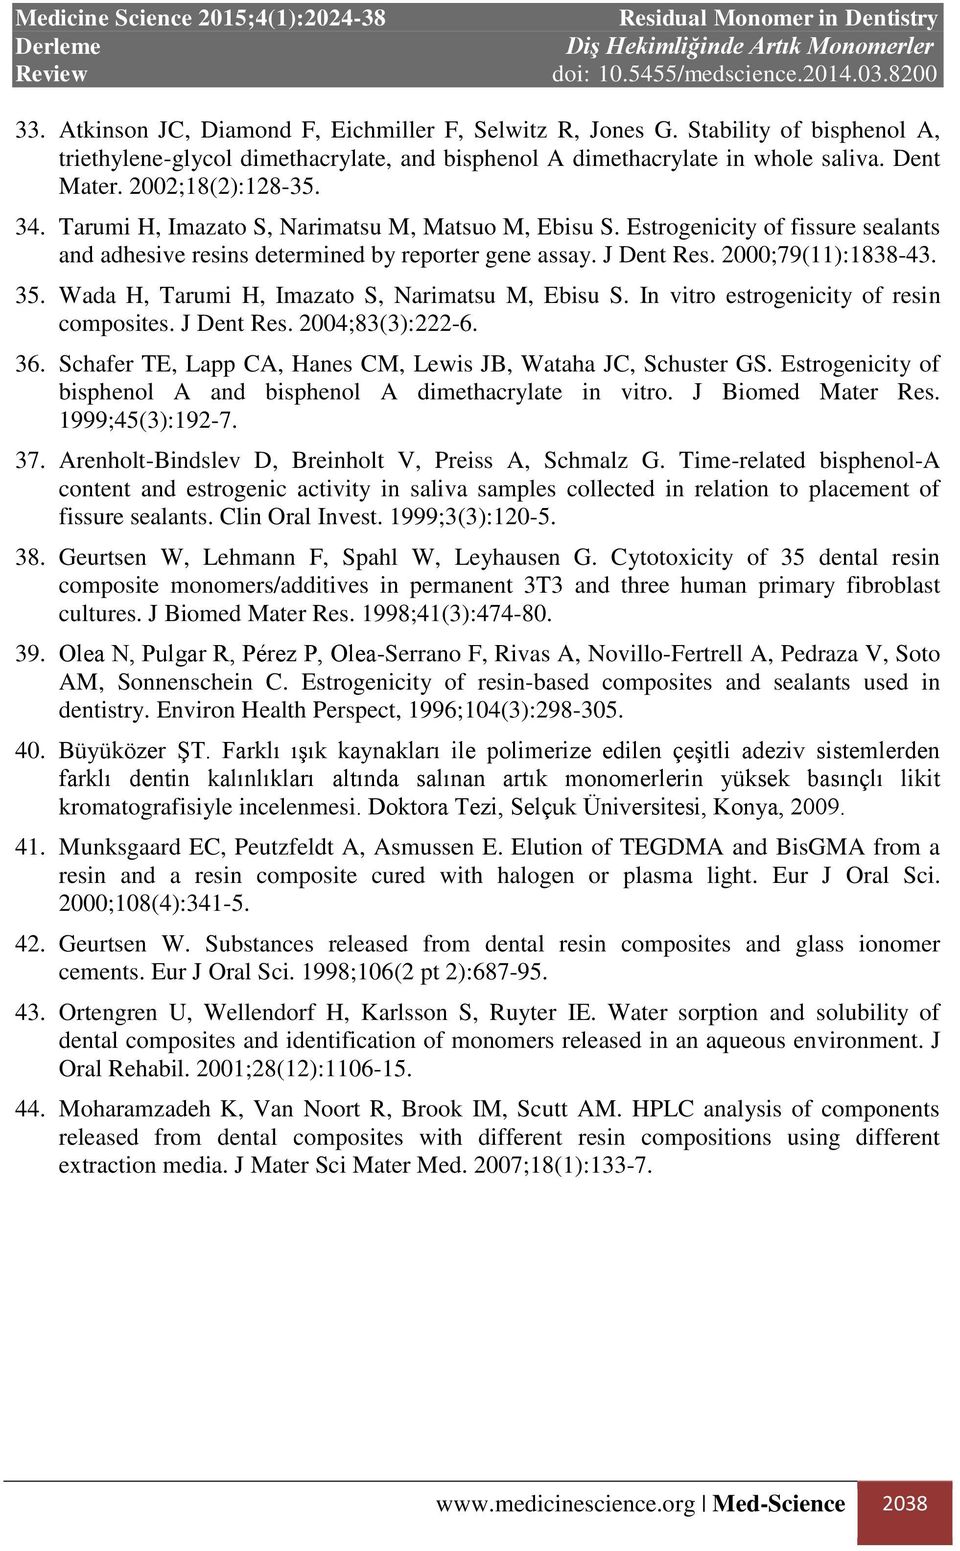 35. Wada H, Tarumi H, Imazato S, Narimatsu M, Ebisu S. In vitro estrogenicity of resin composites. J Dent Res. 2004;83(3):222-6. 36. Schafer TE, Lapp CA, Hanes CM, Lewis JB, Wataha JC, Schuster GS.